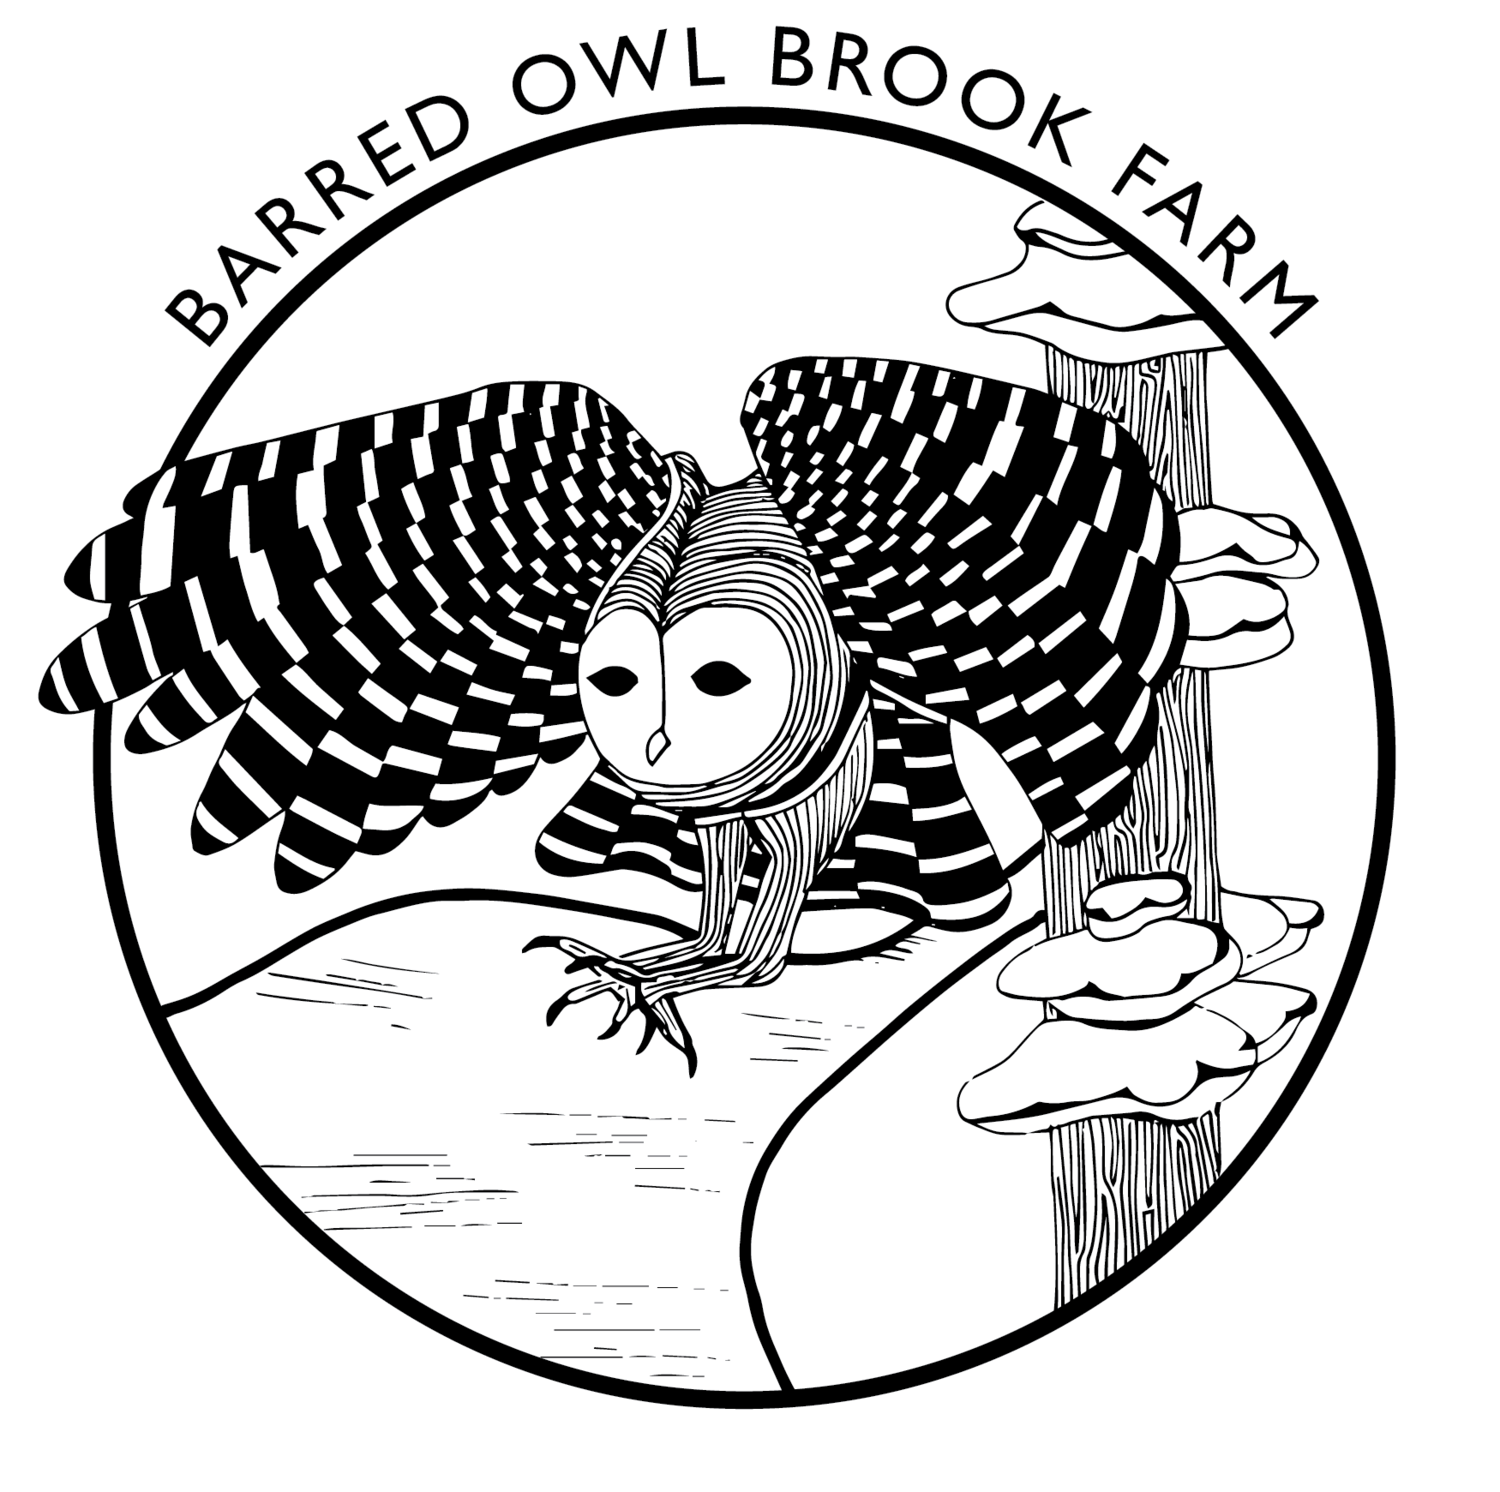 Barred Owl Brook Farm